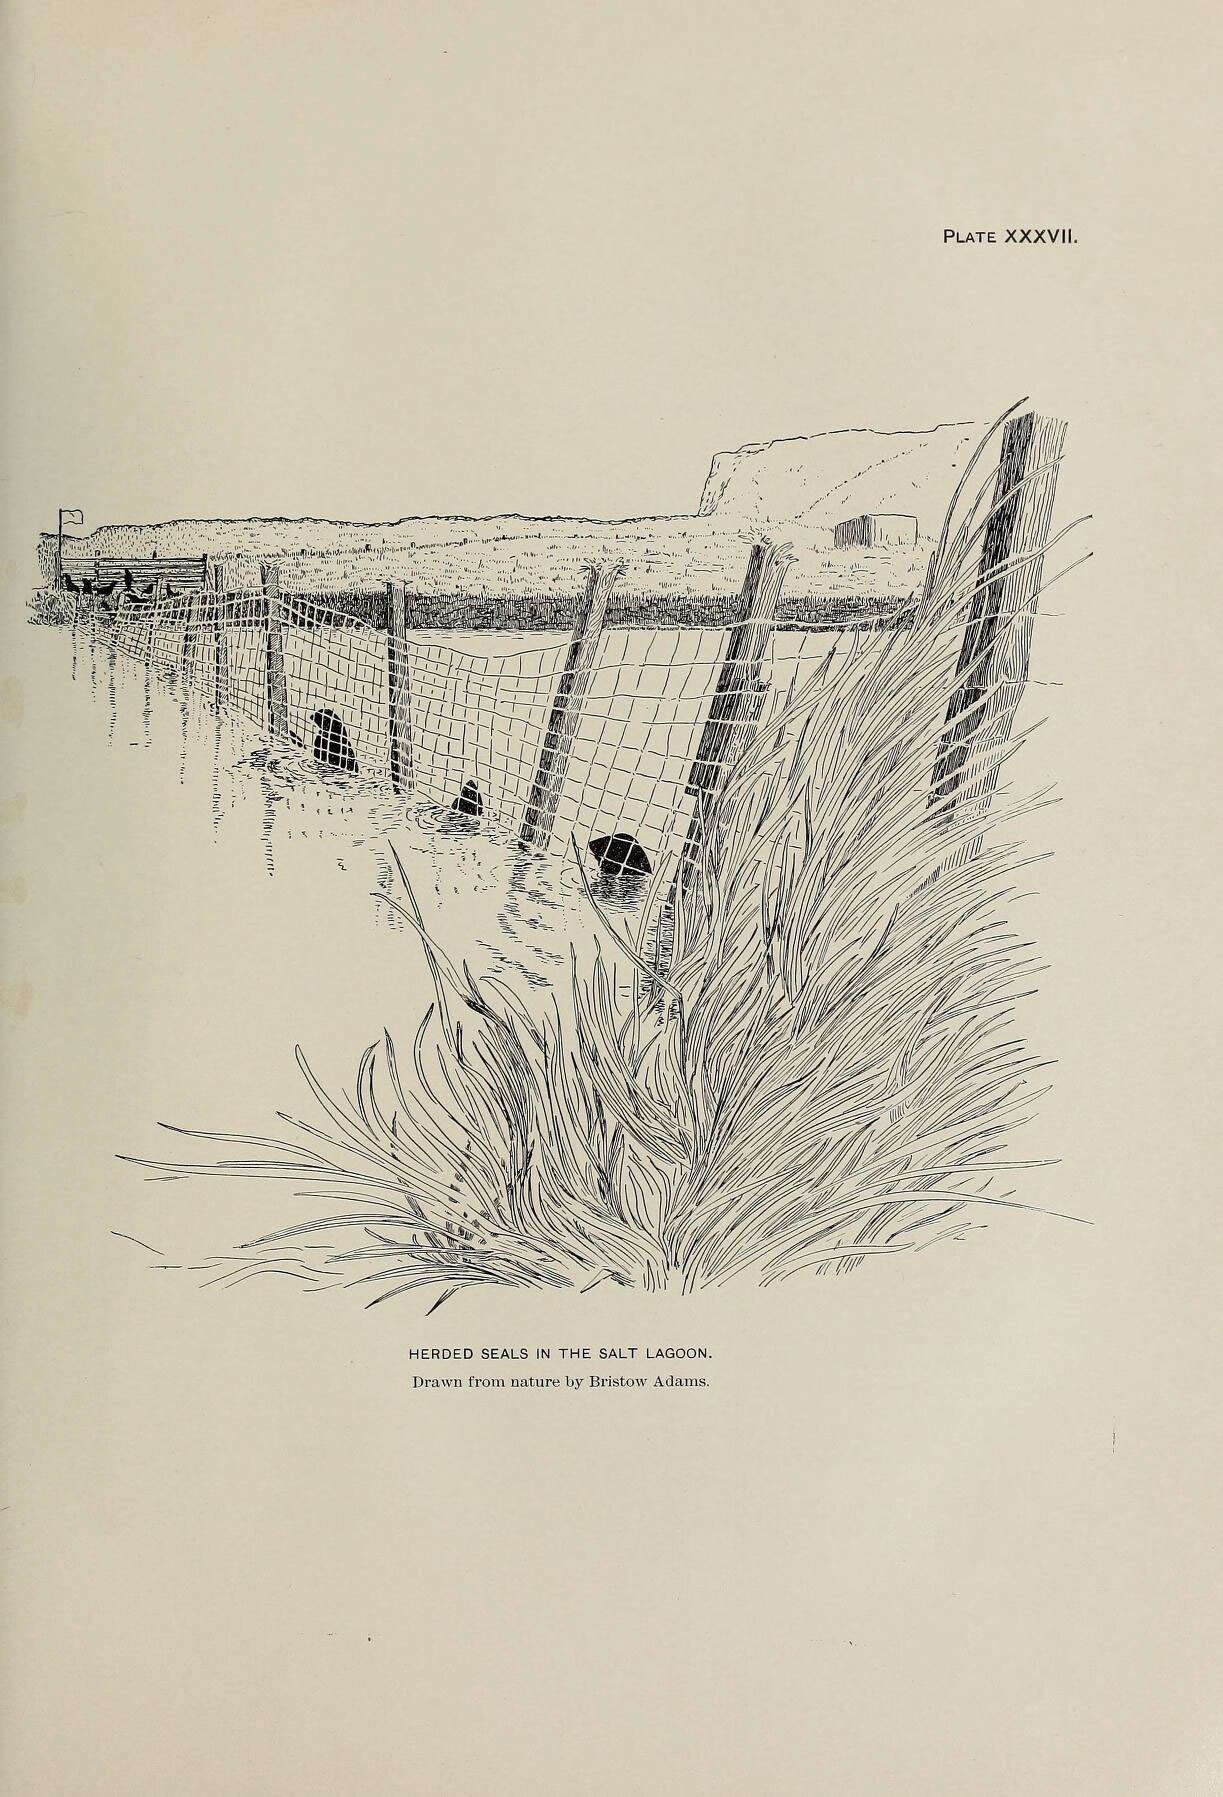 Image de Callorhinus J. E. Gray 1859